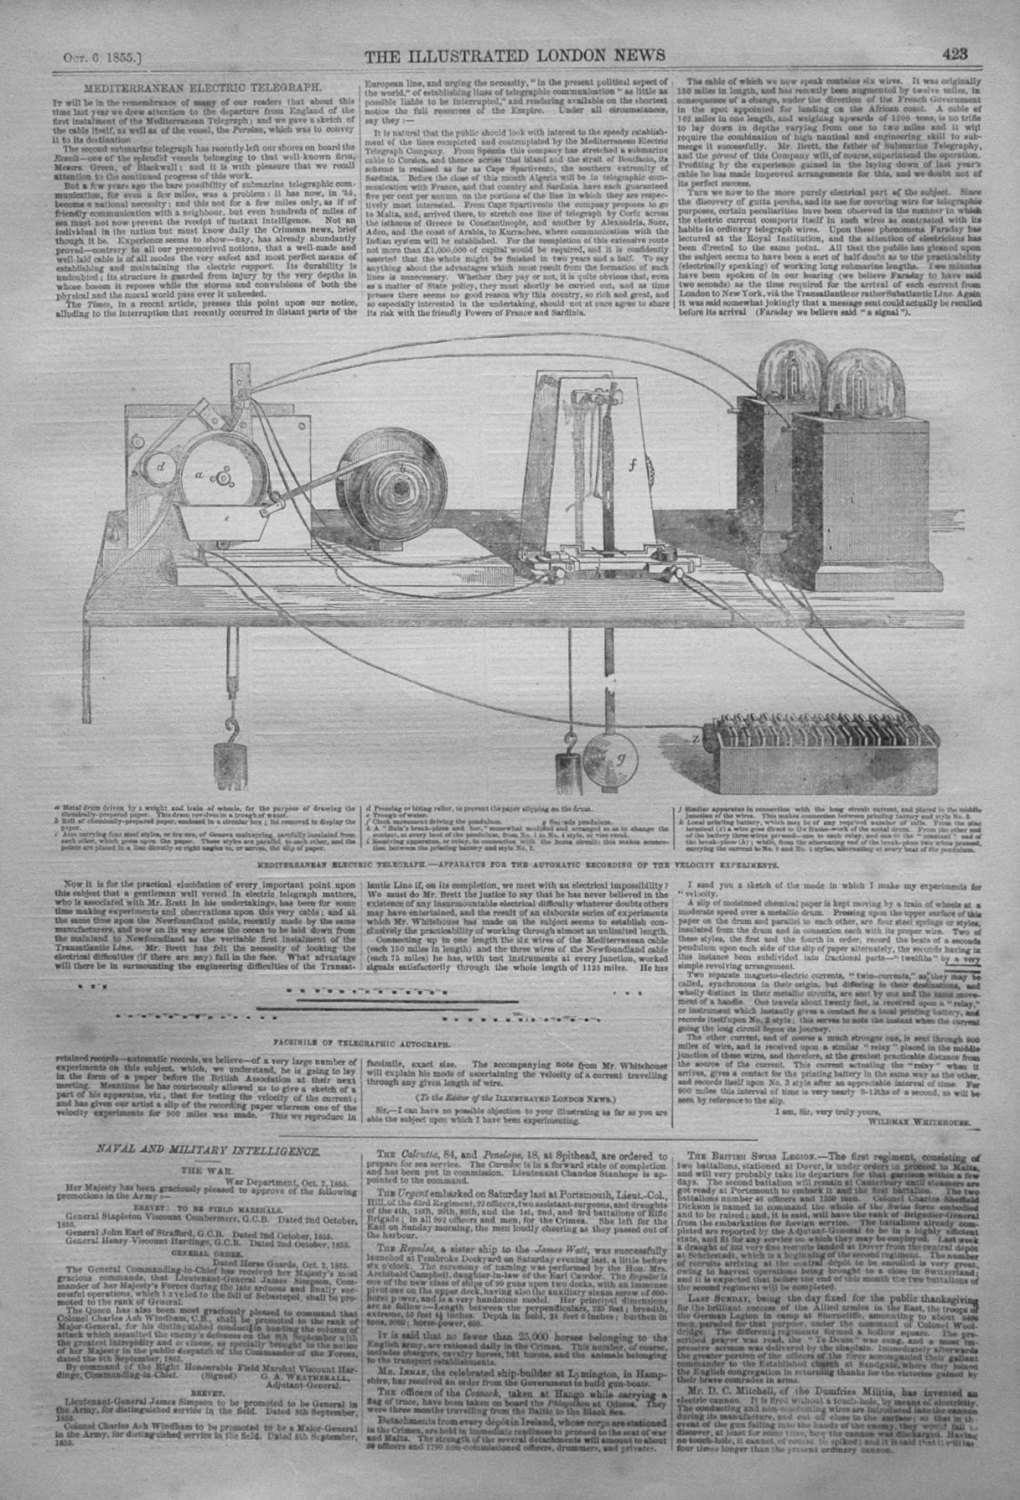 Mediterranean Electric Telegraph. 1855